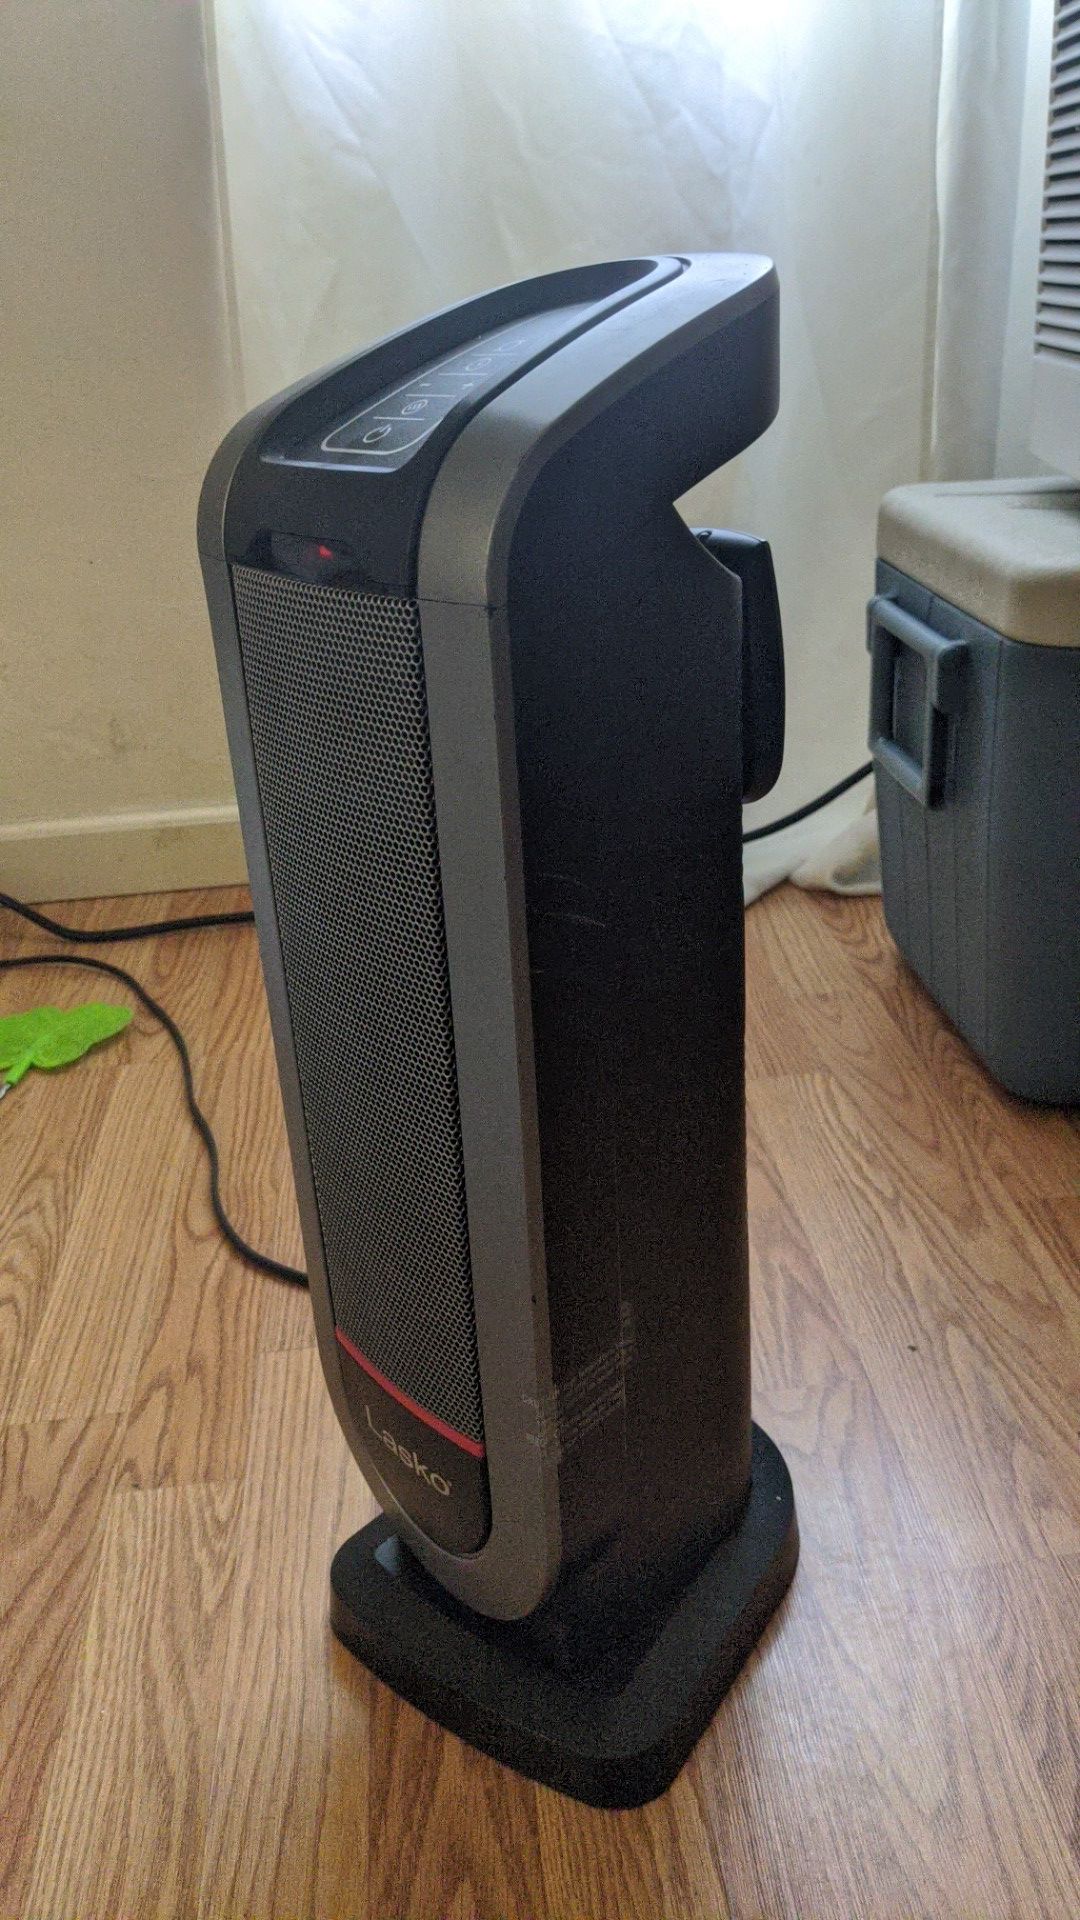 Lasko oscillating tower heater with remote